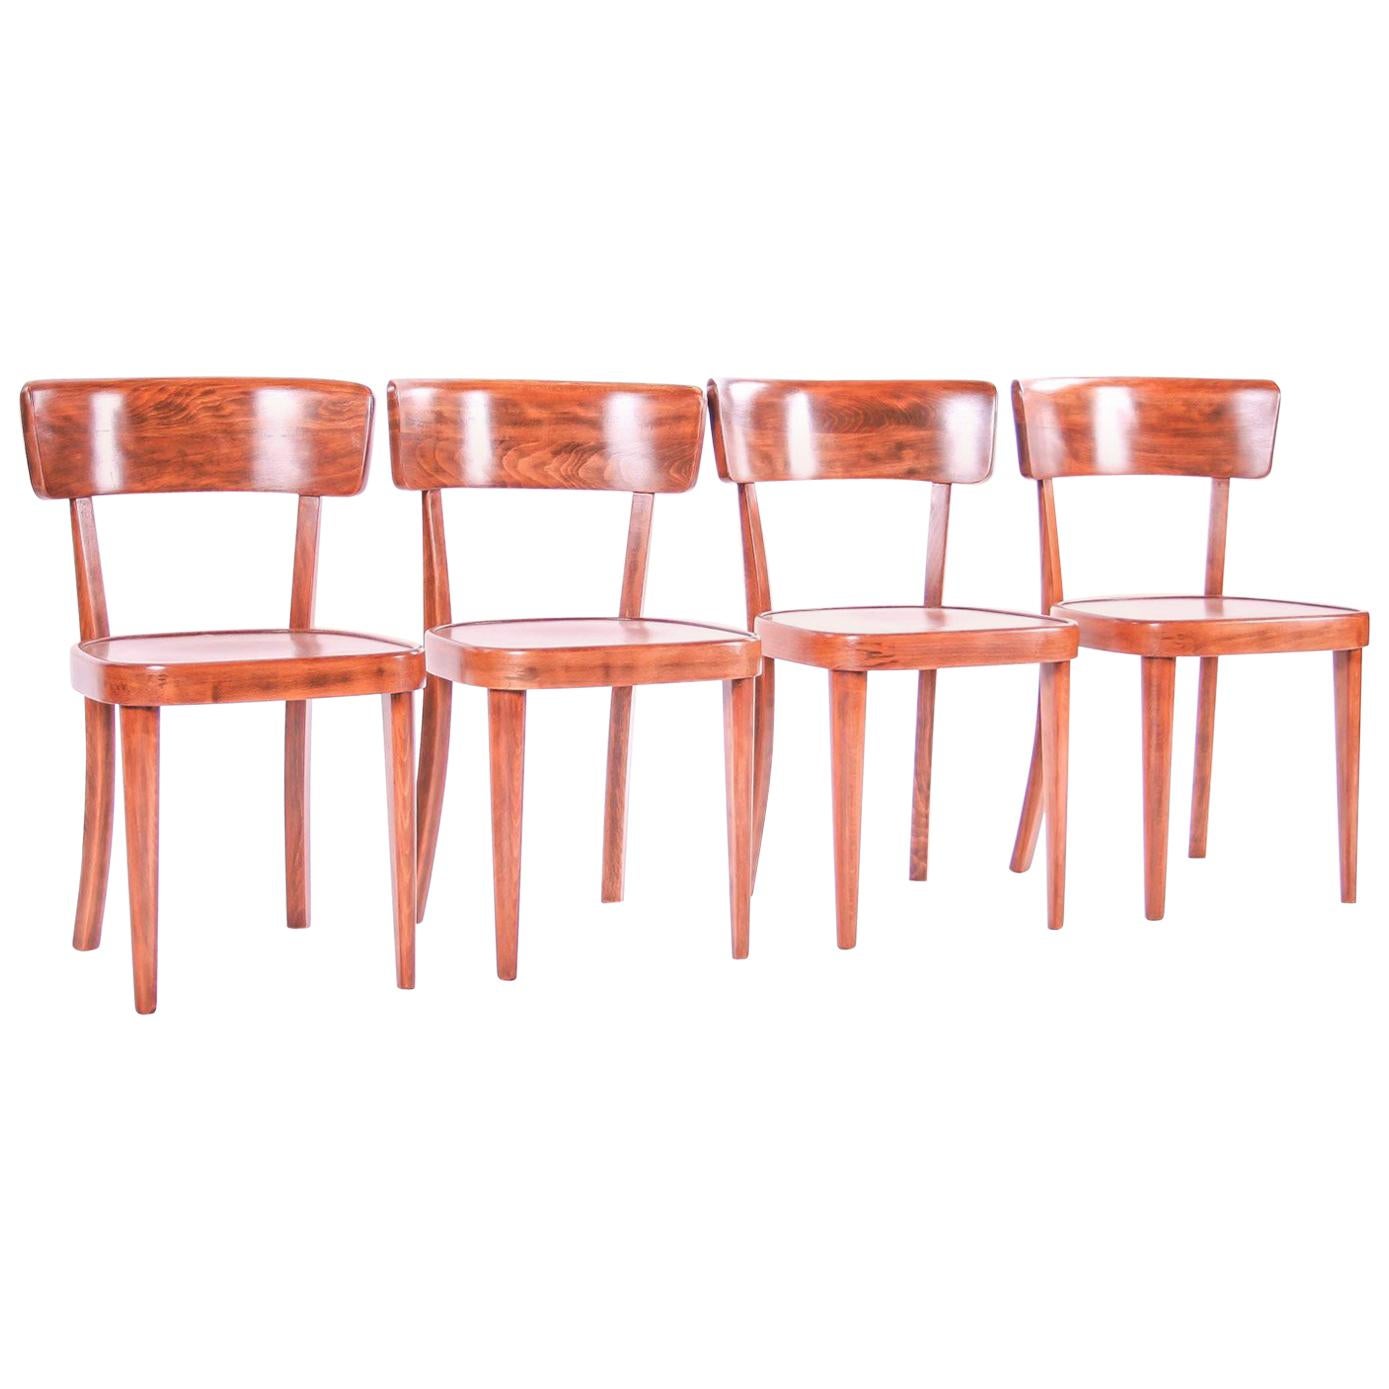 Czech Interwar Avantgard Design Dining Chairs by Jindrich Halabala 'Up Zavody' For Sale